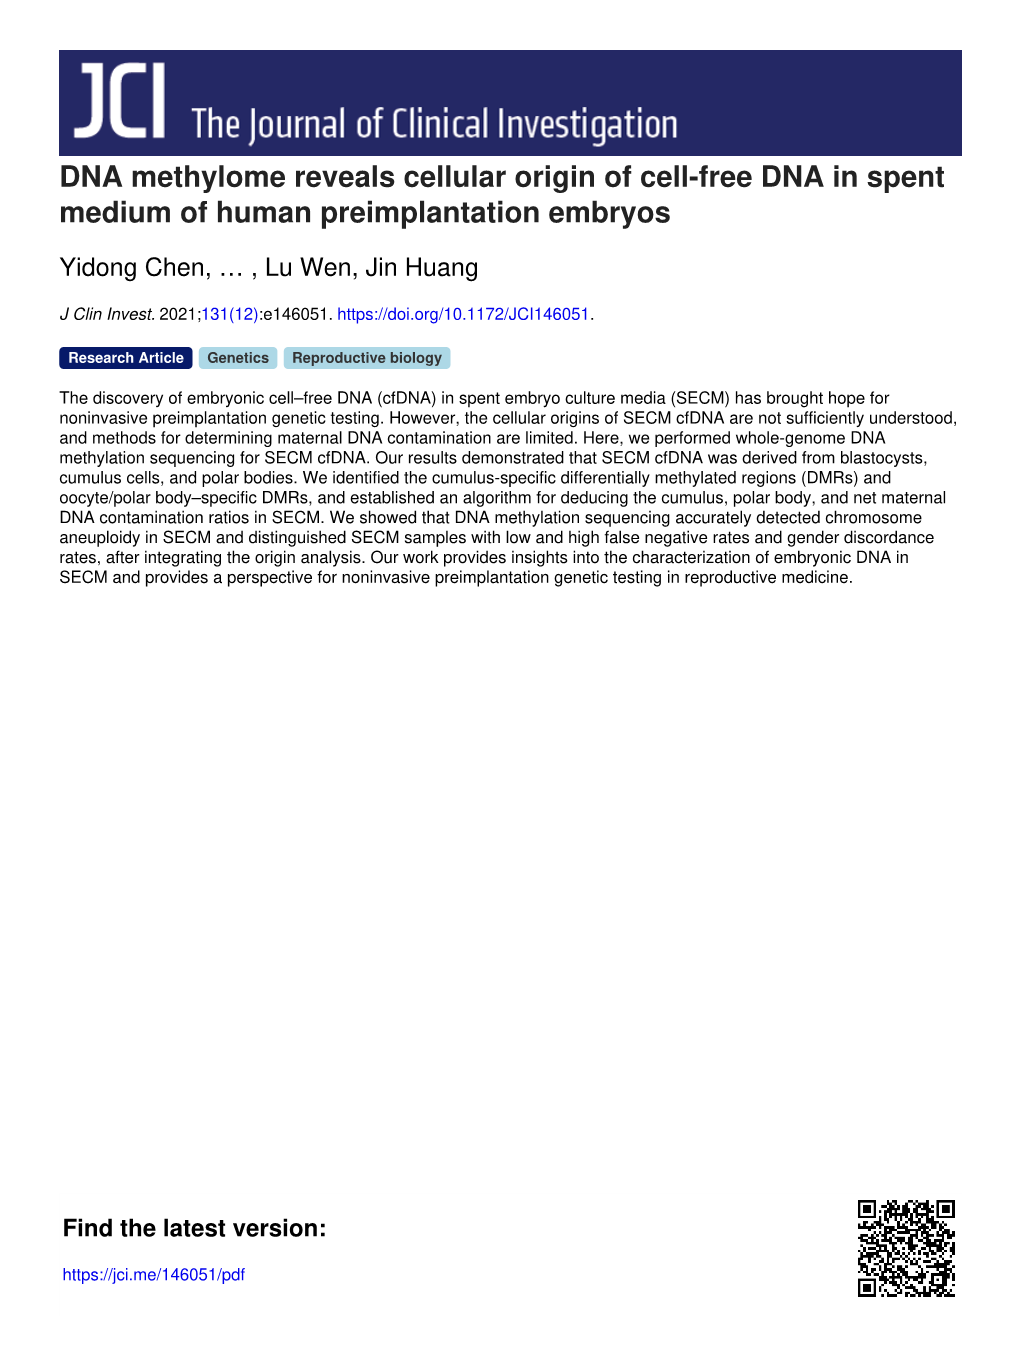 DNA Methylome Reveals Cellular Origin of Cell-Free DNA in Spent Medium of Human Preimplantation Embryos